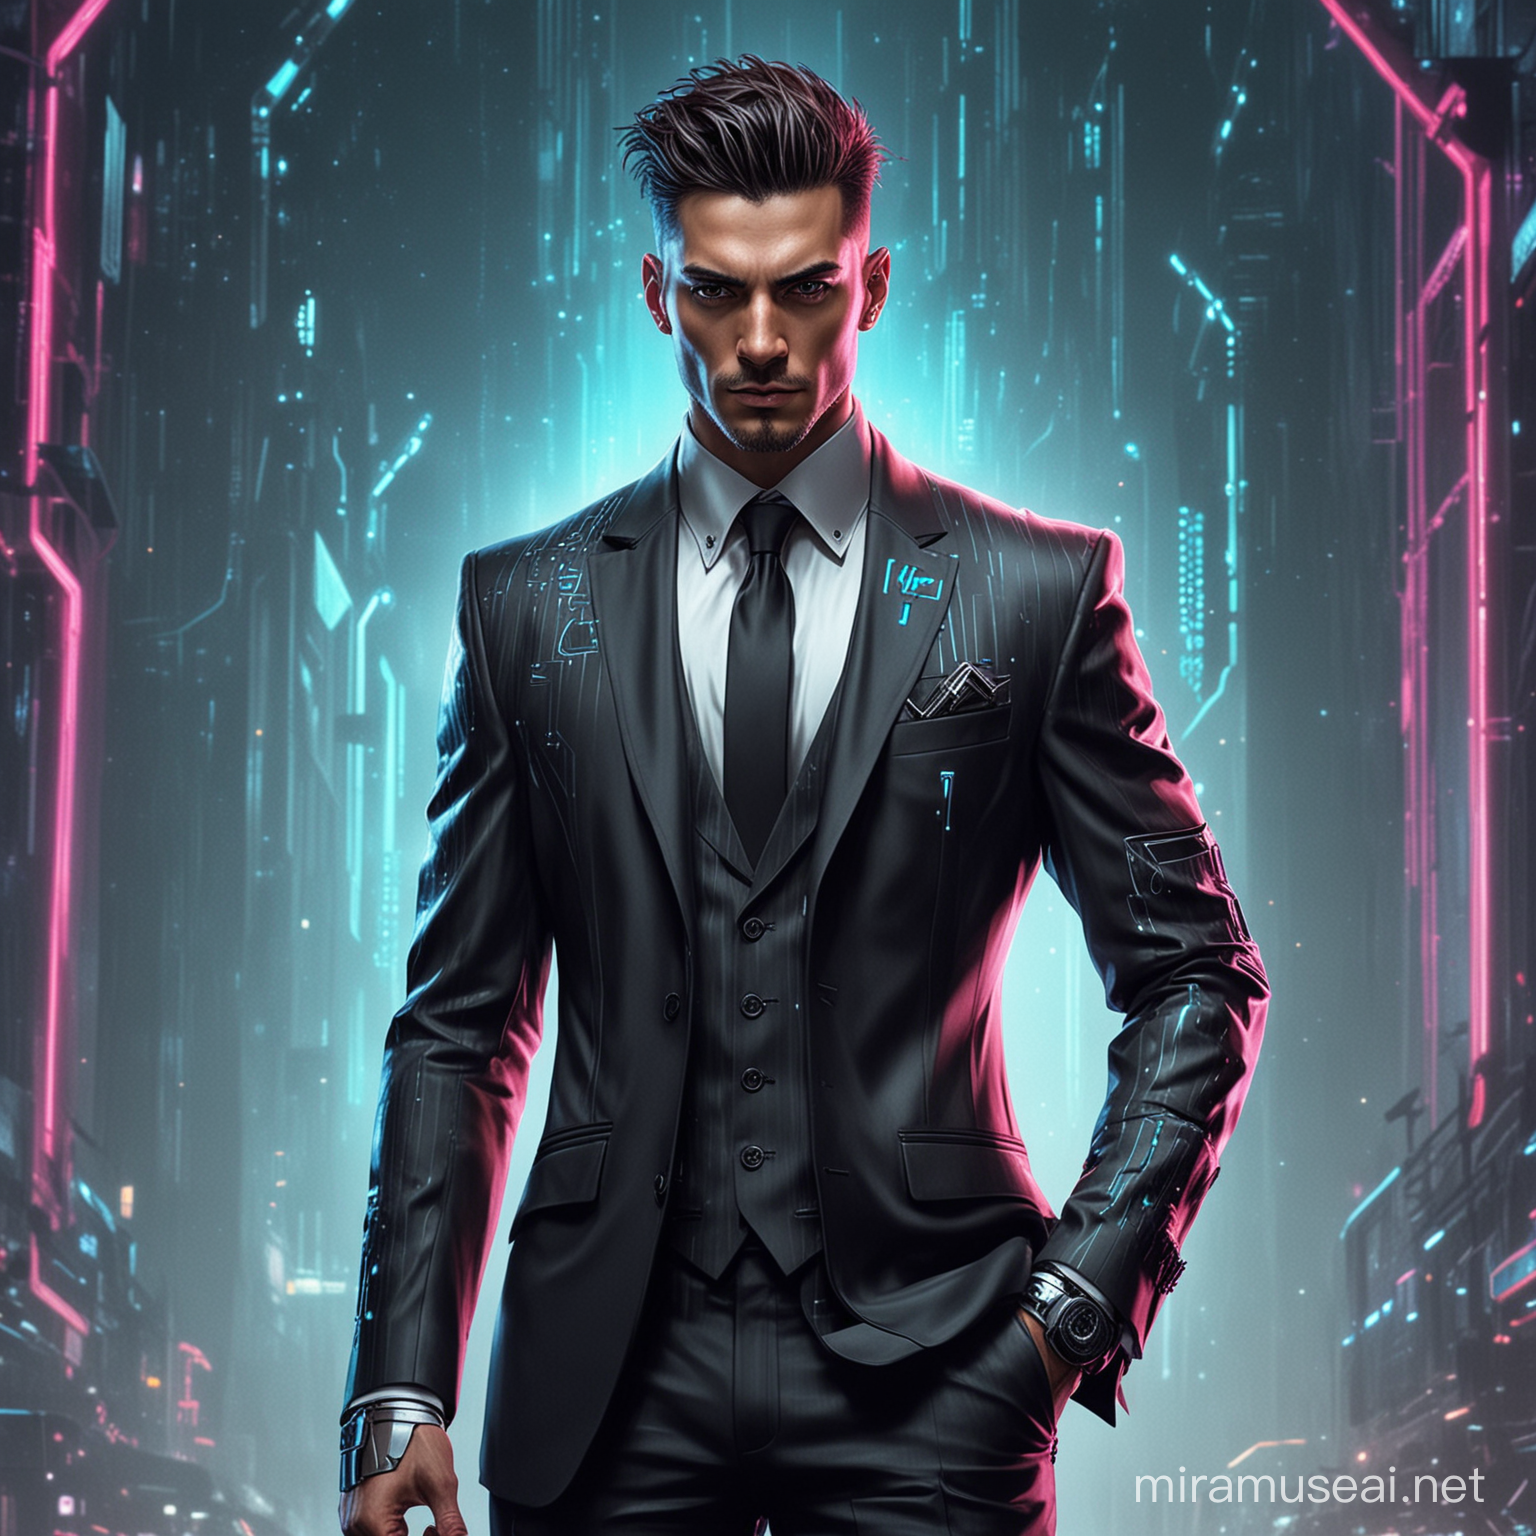 Futuristic Cyberpunk Man in Elegant Suit with Cityscape Background